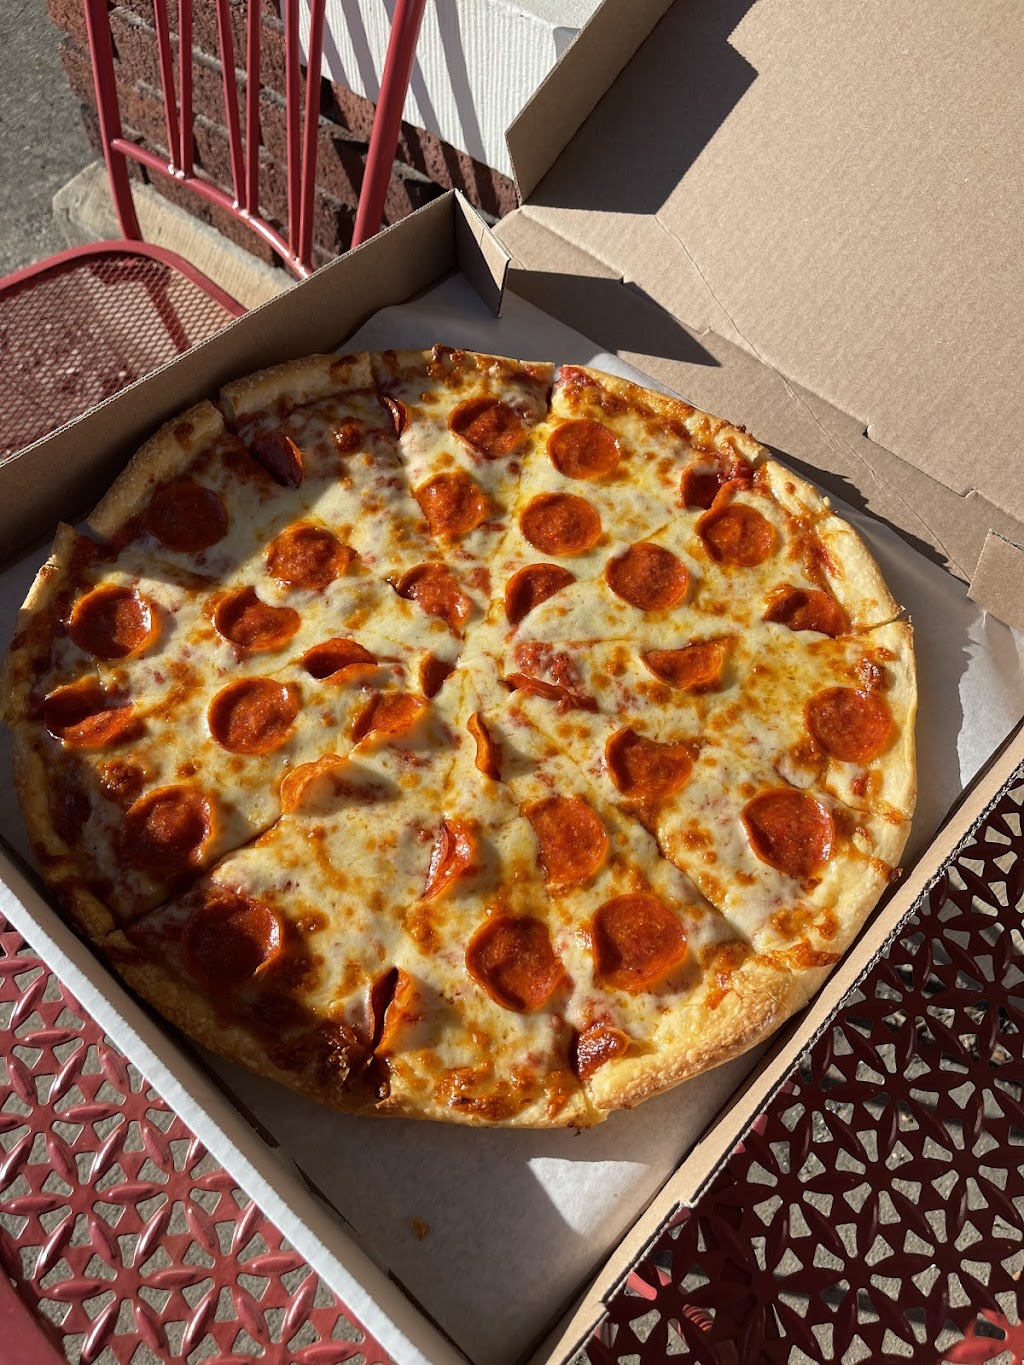 DaNells Pizza | 133 E Herrick Ave, Wellington, OH 44090, USA | Phone: (440) 647-9989